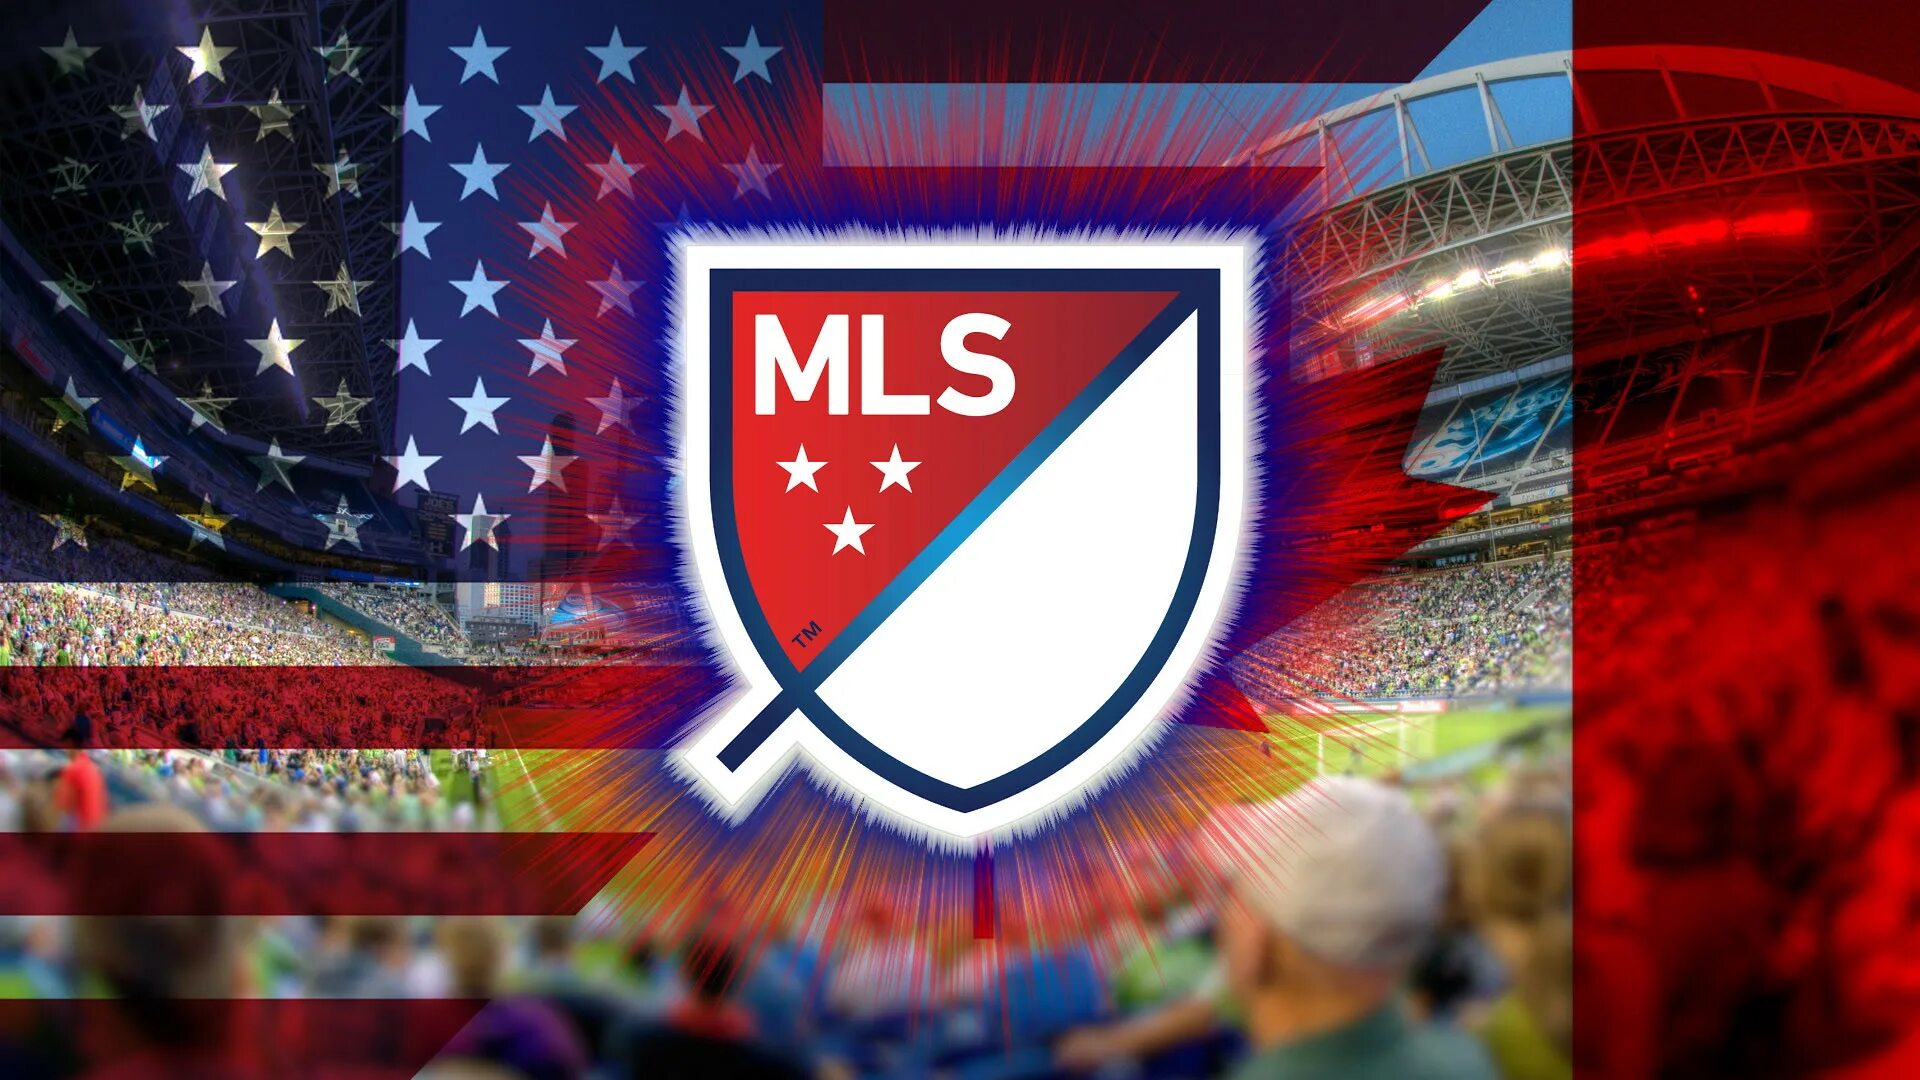 Млс футбол 2023. МЛС. MLS футбол. Футбол США МЛС. Американская футбольная лига MLS.